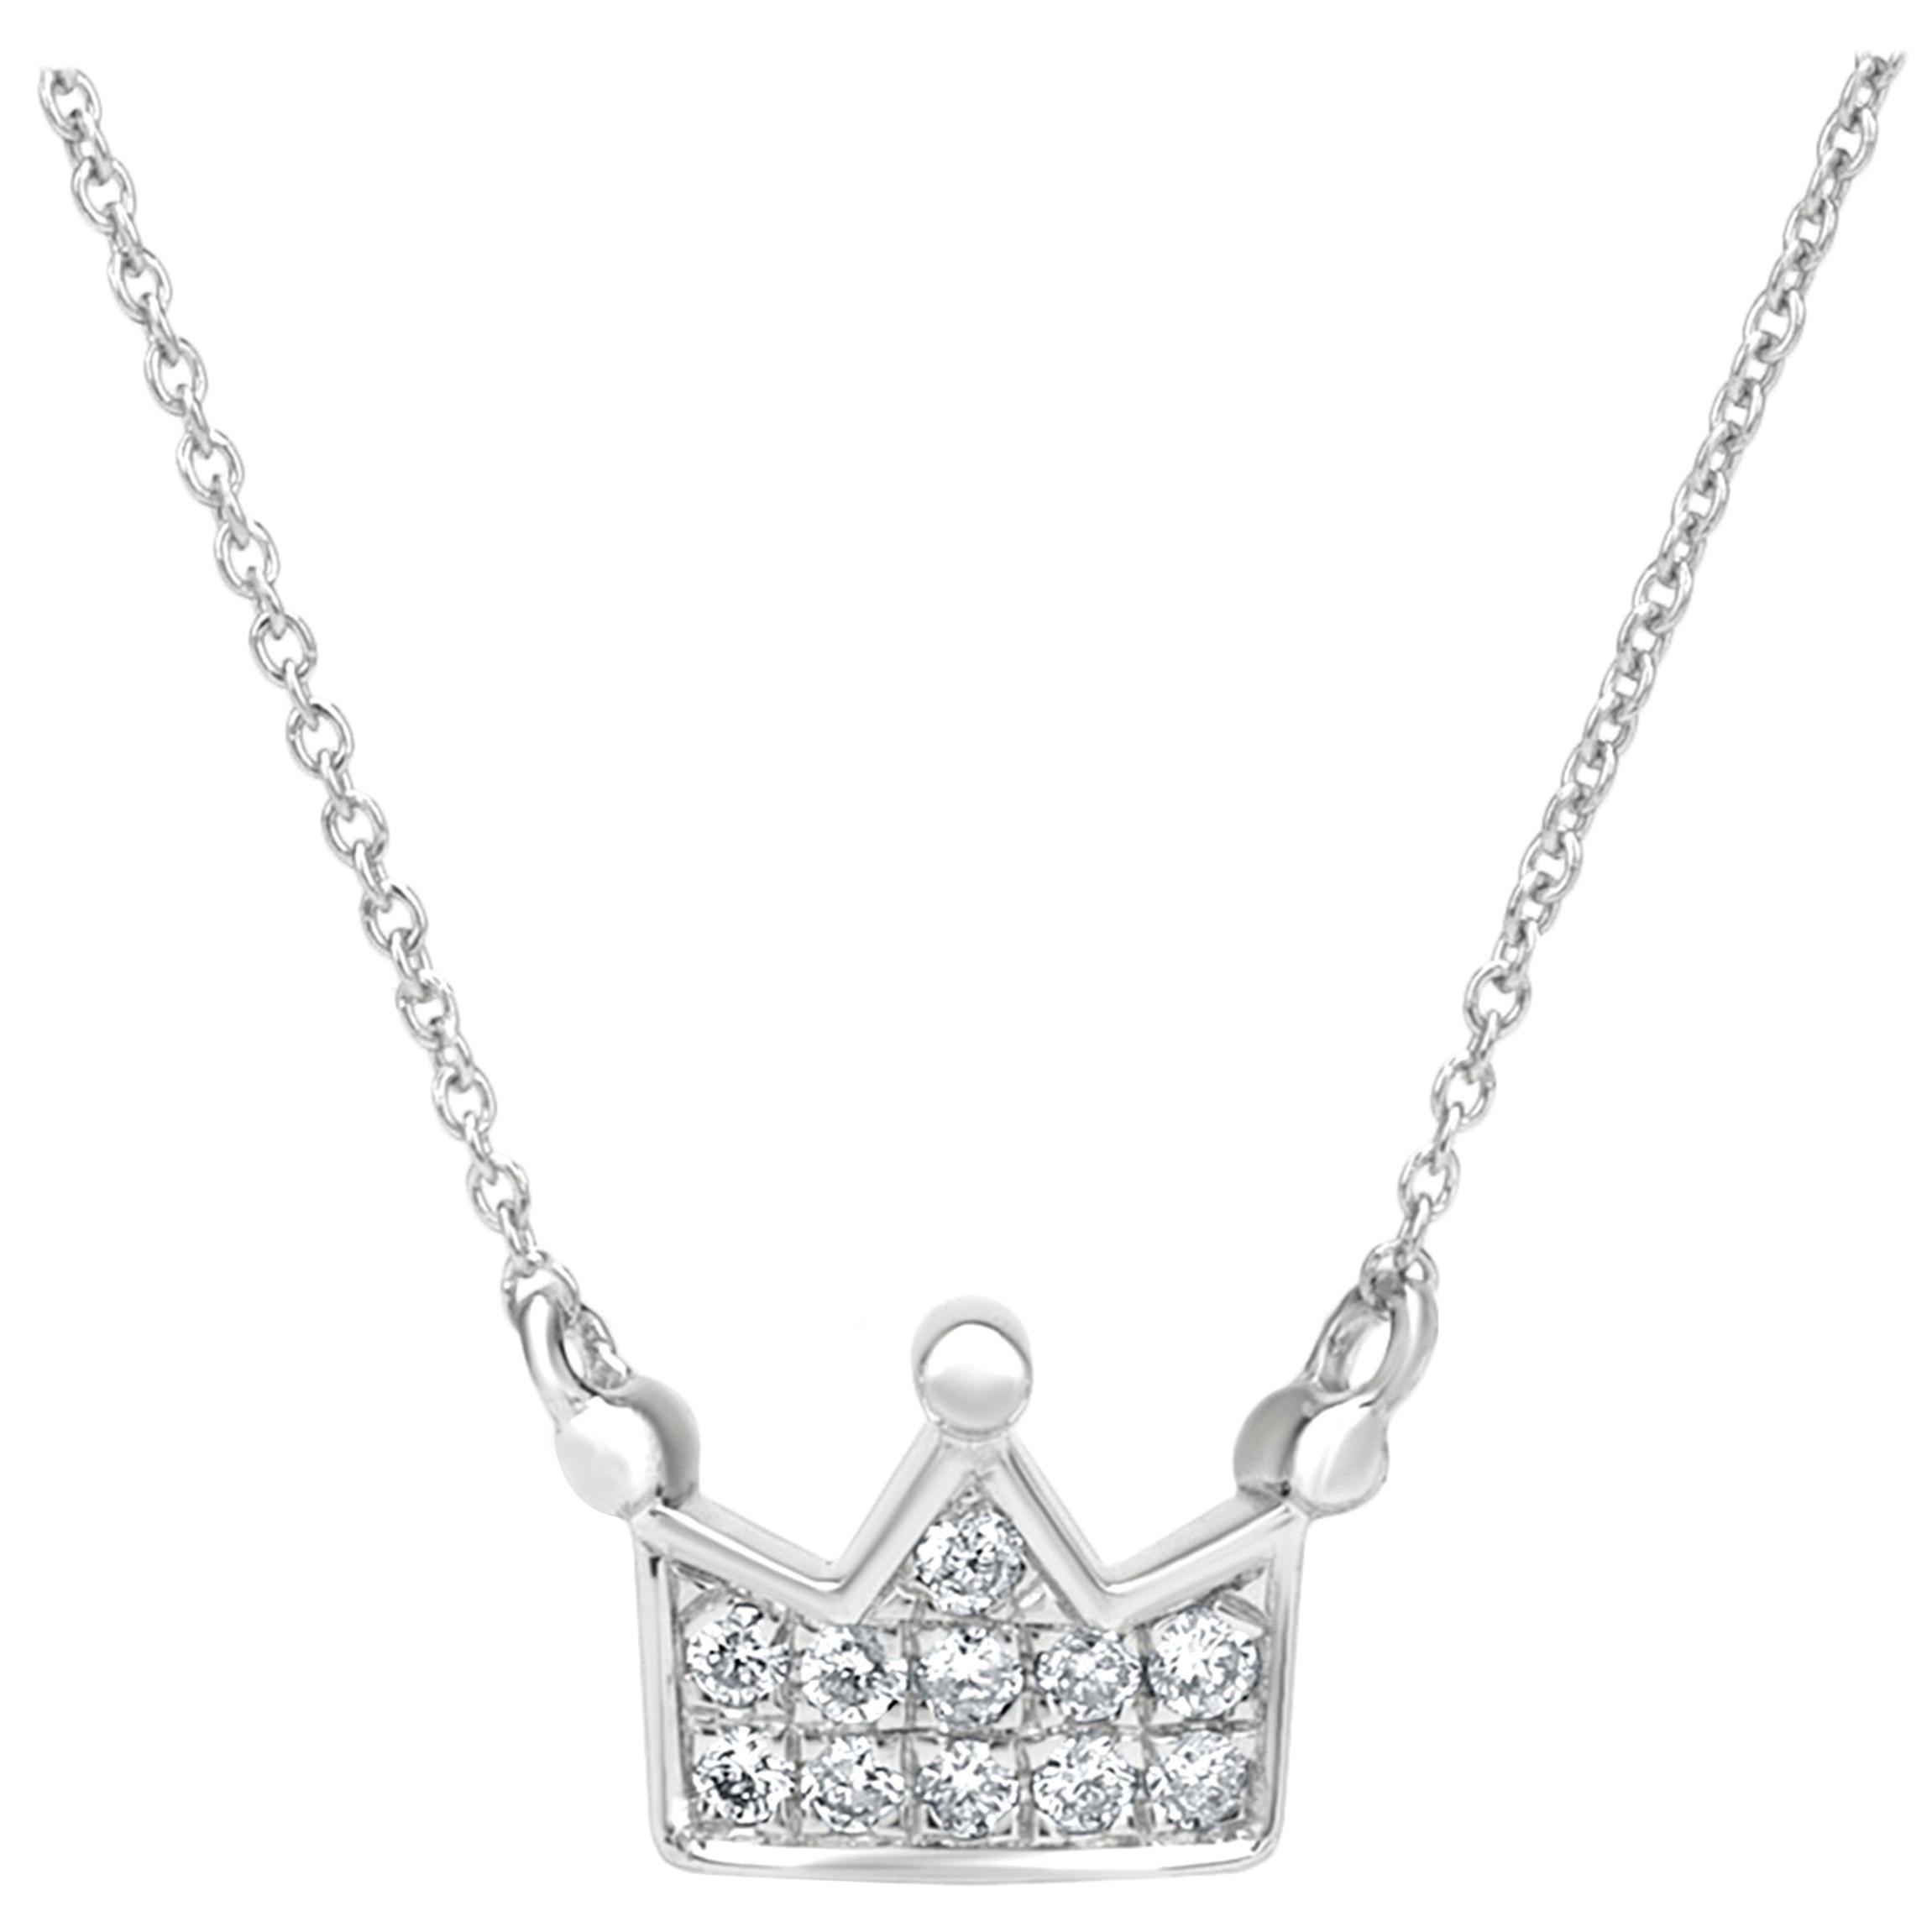 Luxle Crown Diamond Pendant Necklace in 18k White Gold